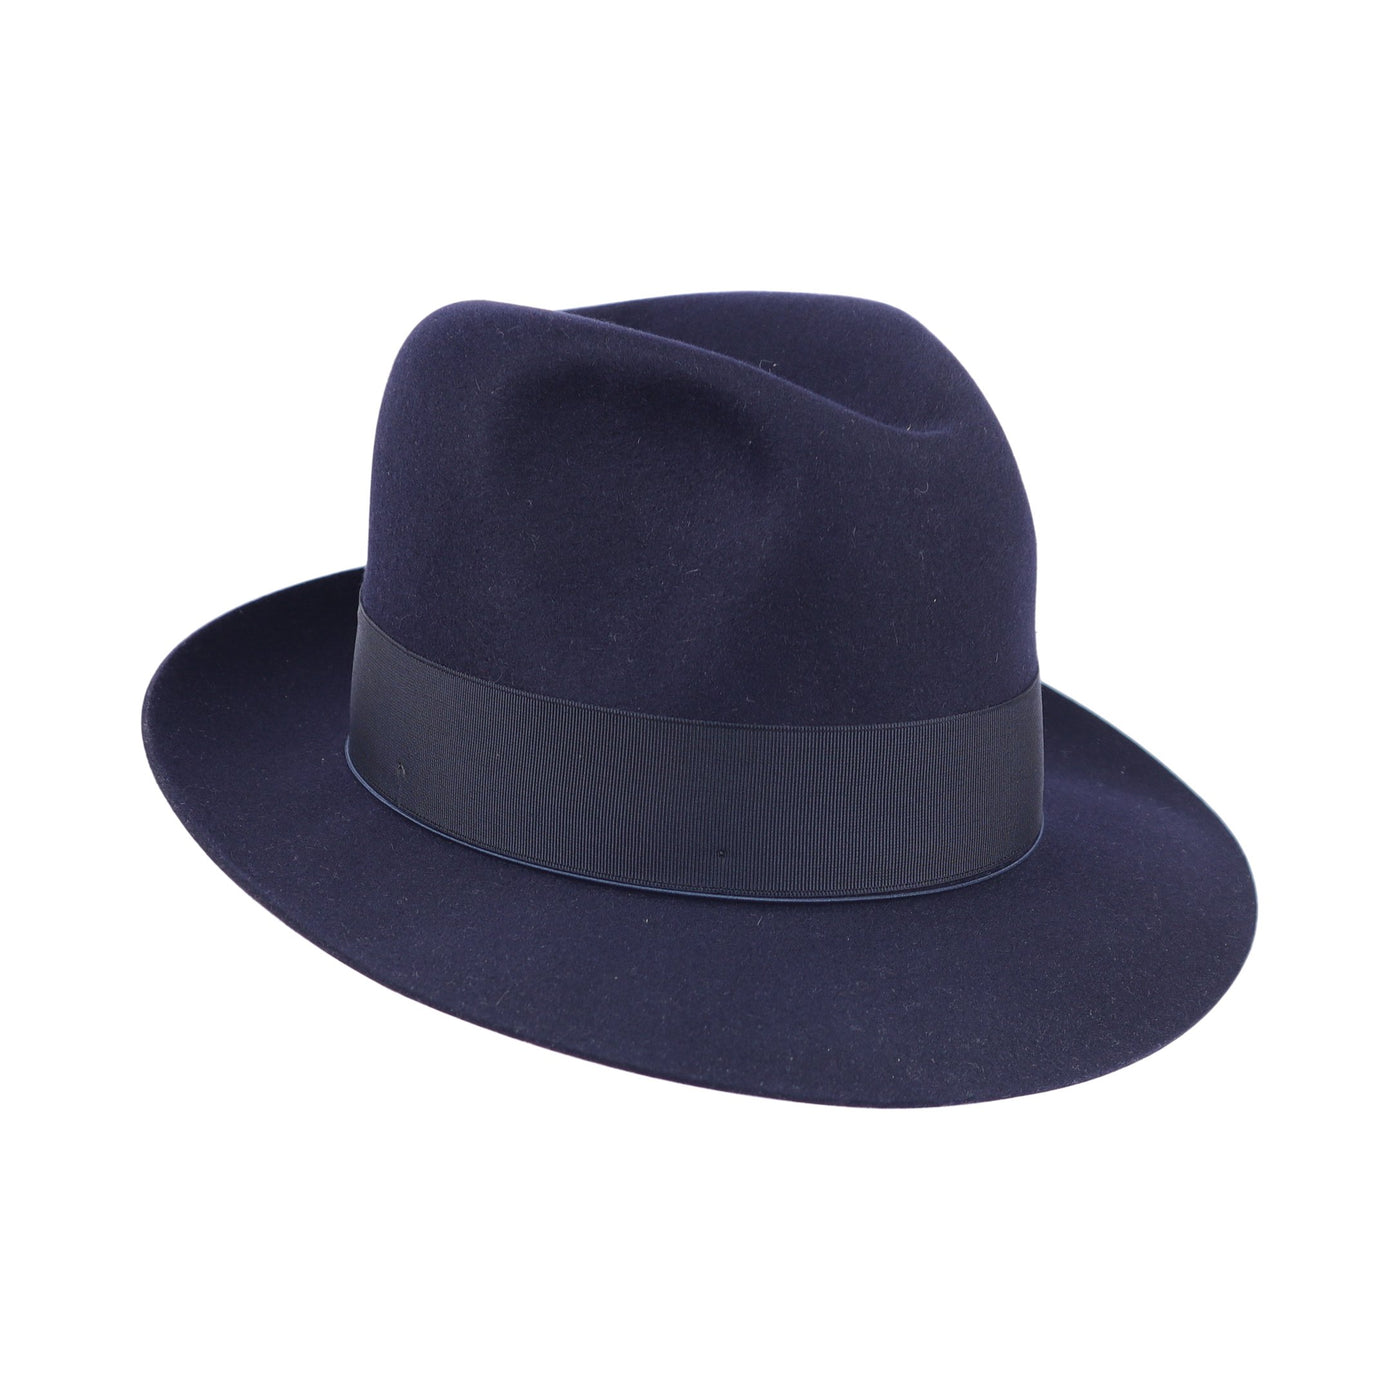 Film (JJ) - Navy, product_type] - Borsalino for Atica fedora hat